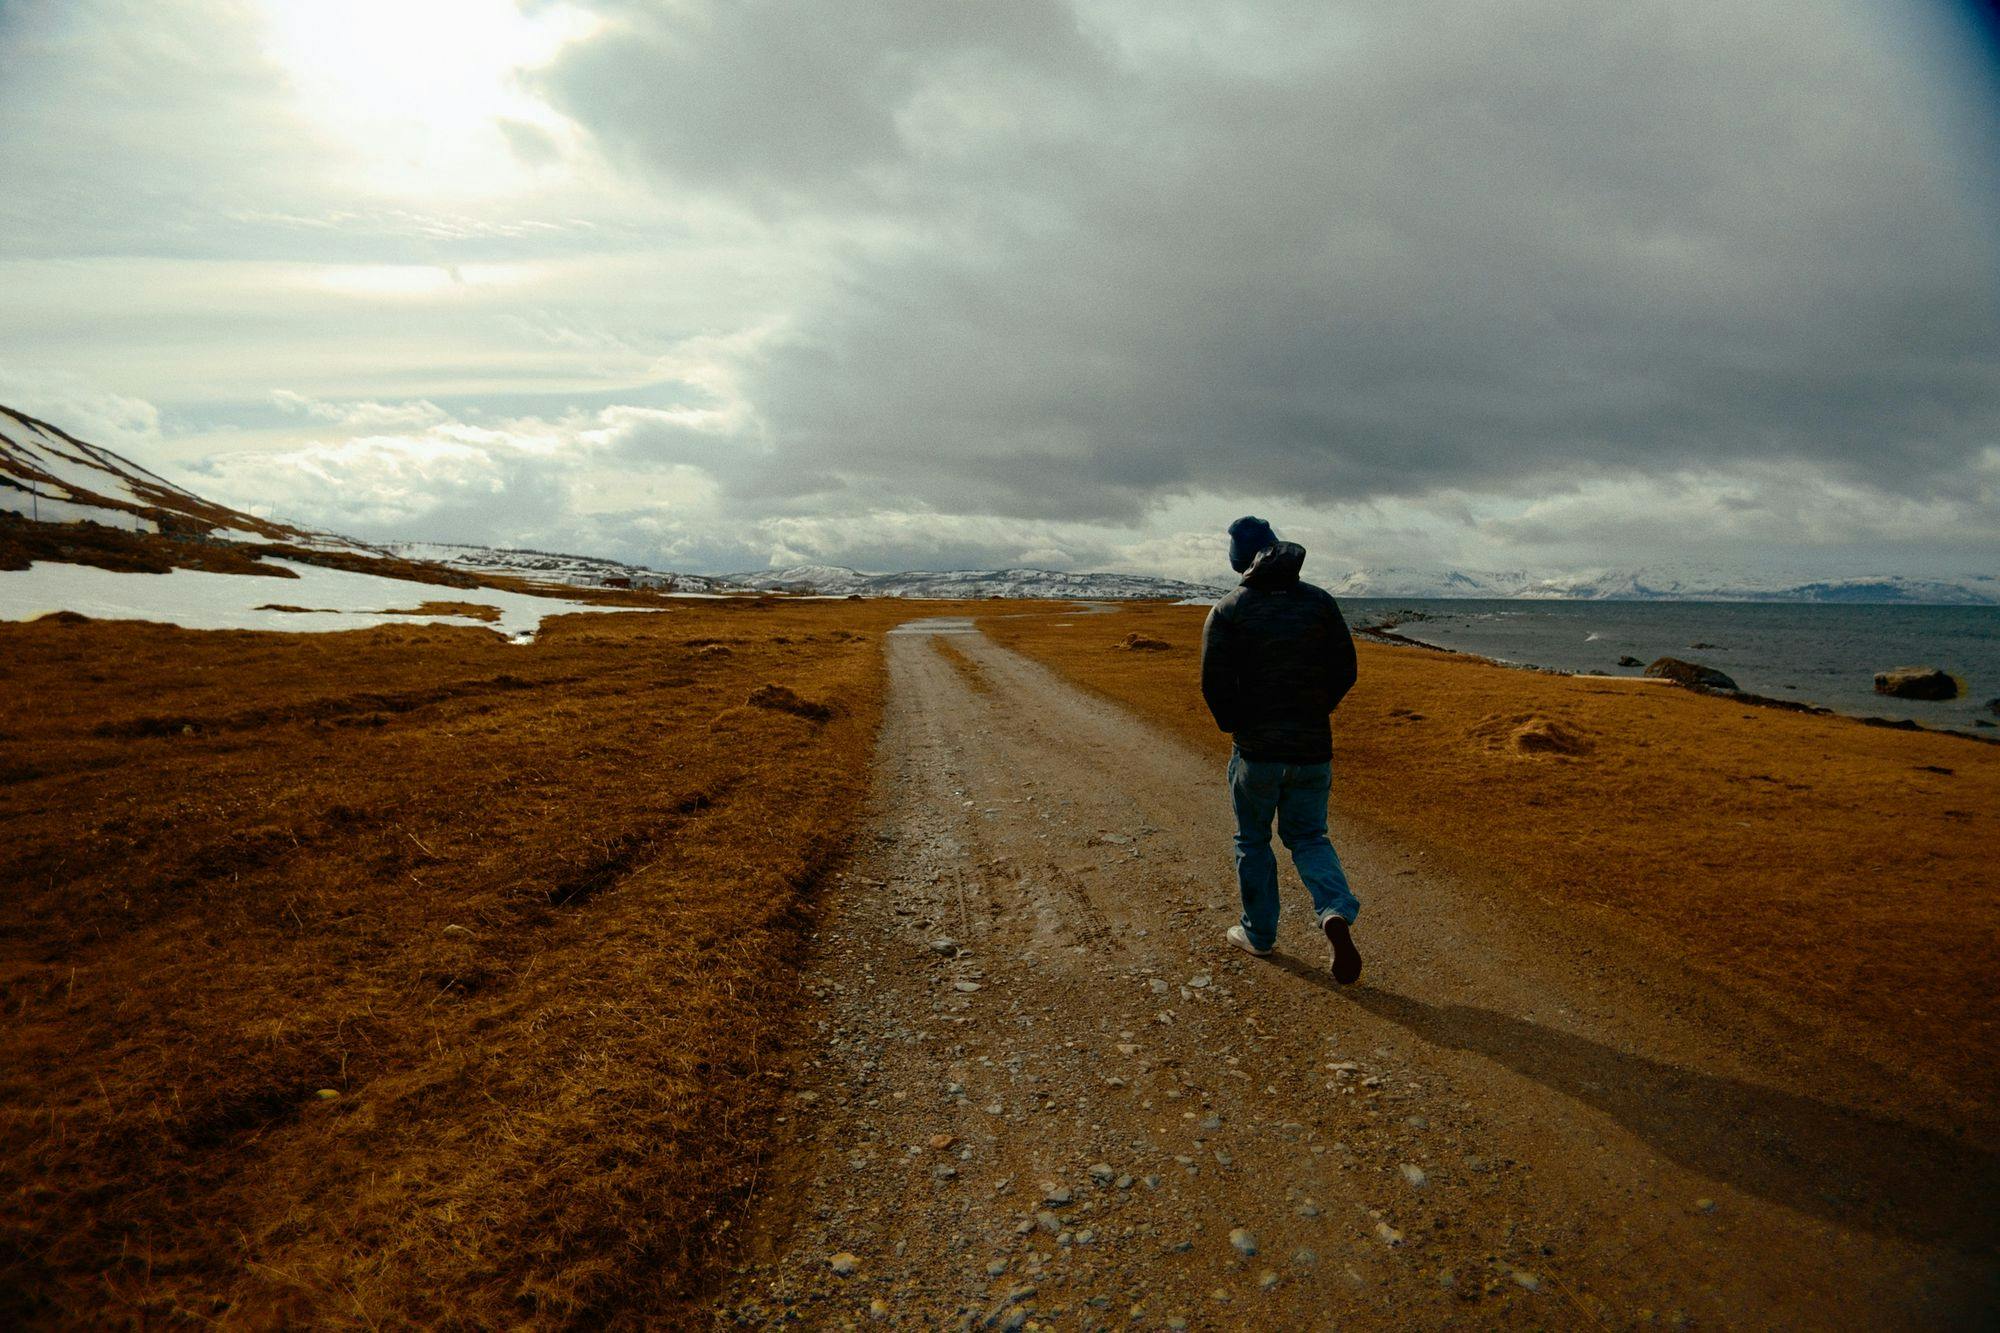 A man walking down an empty dirt road